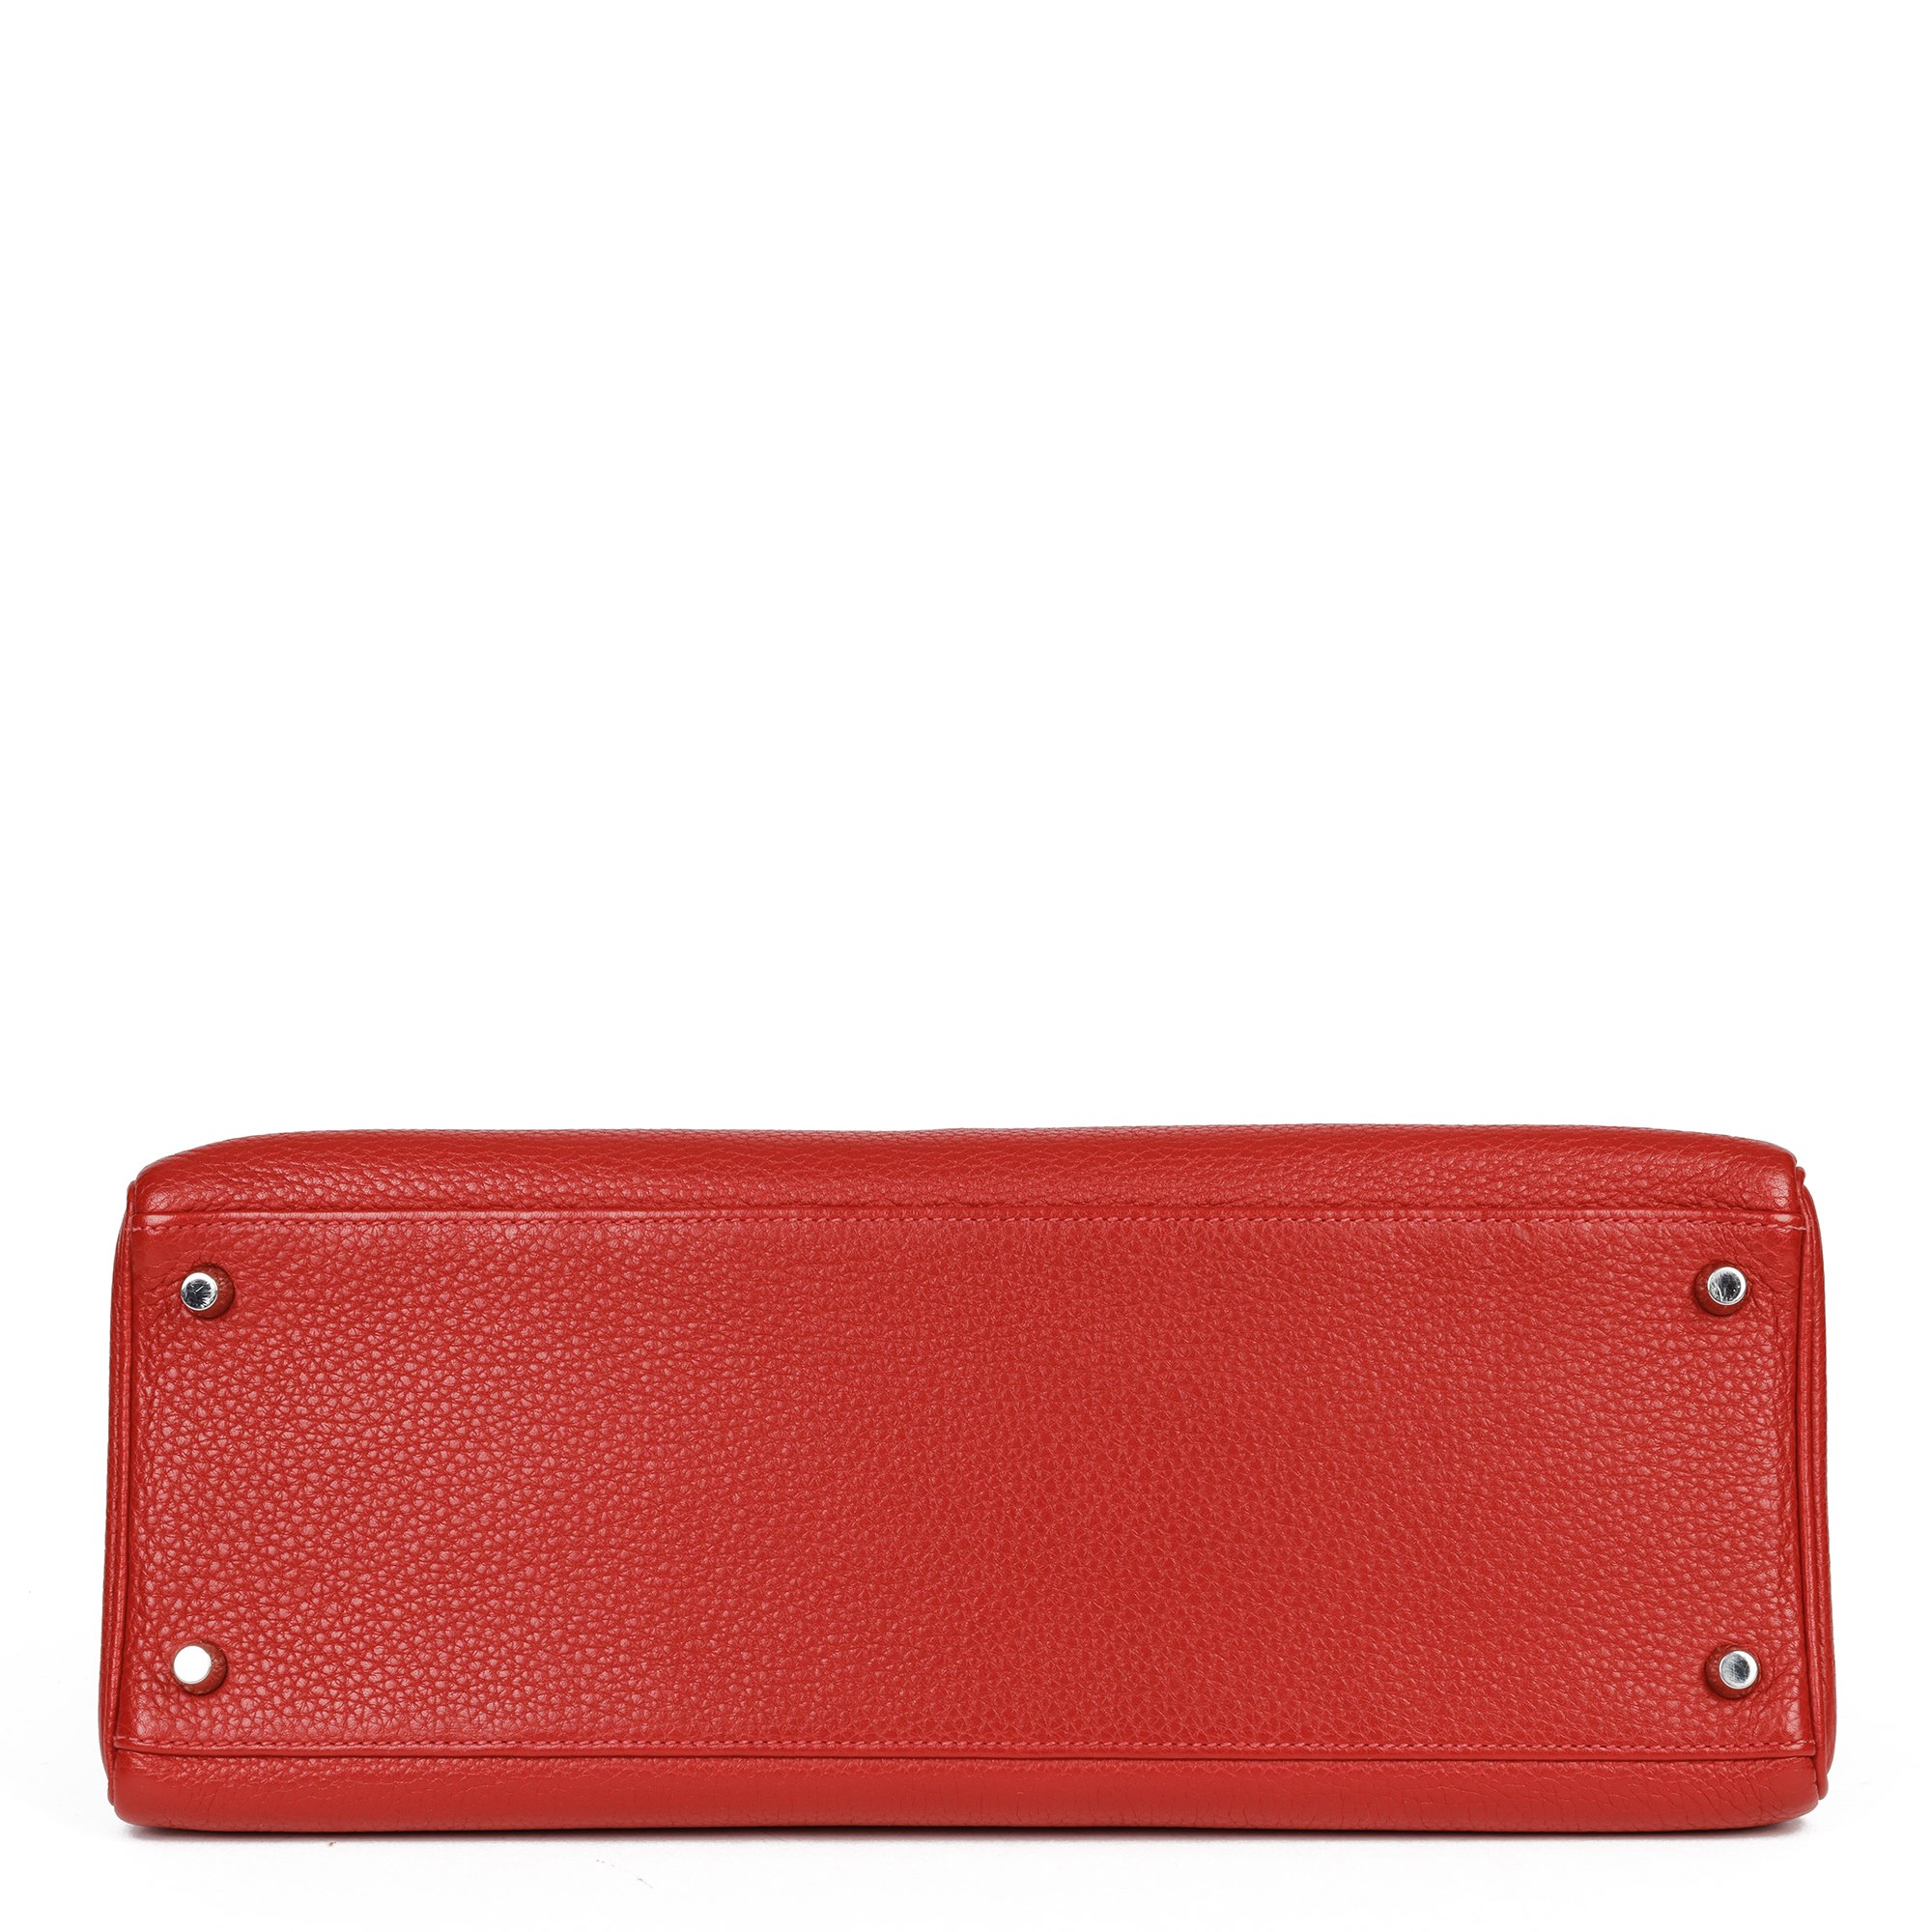 Hermès Rouge Casaque Togo Leather Kelly 35cm Retourne